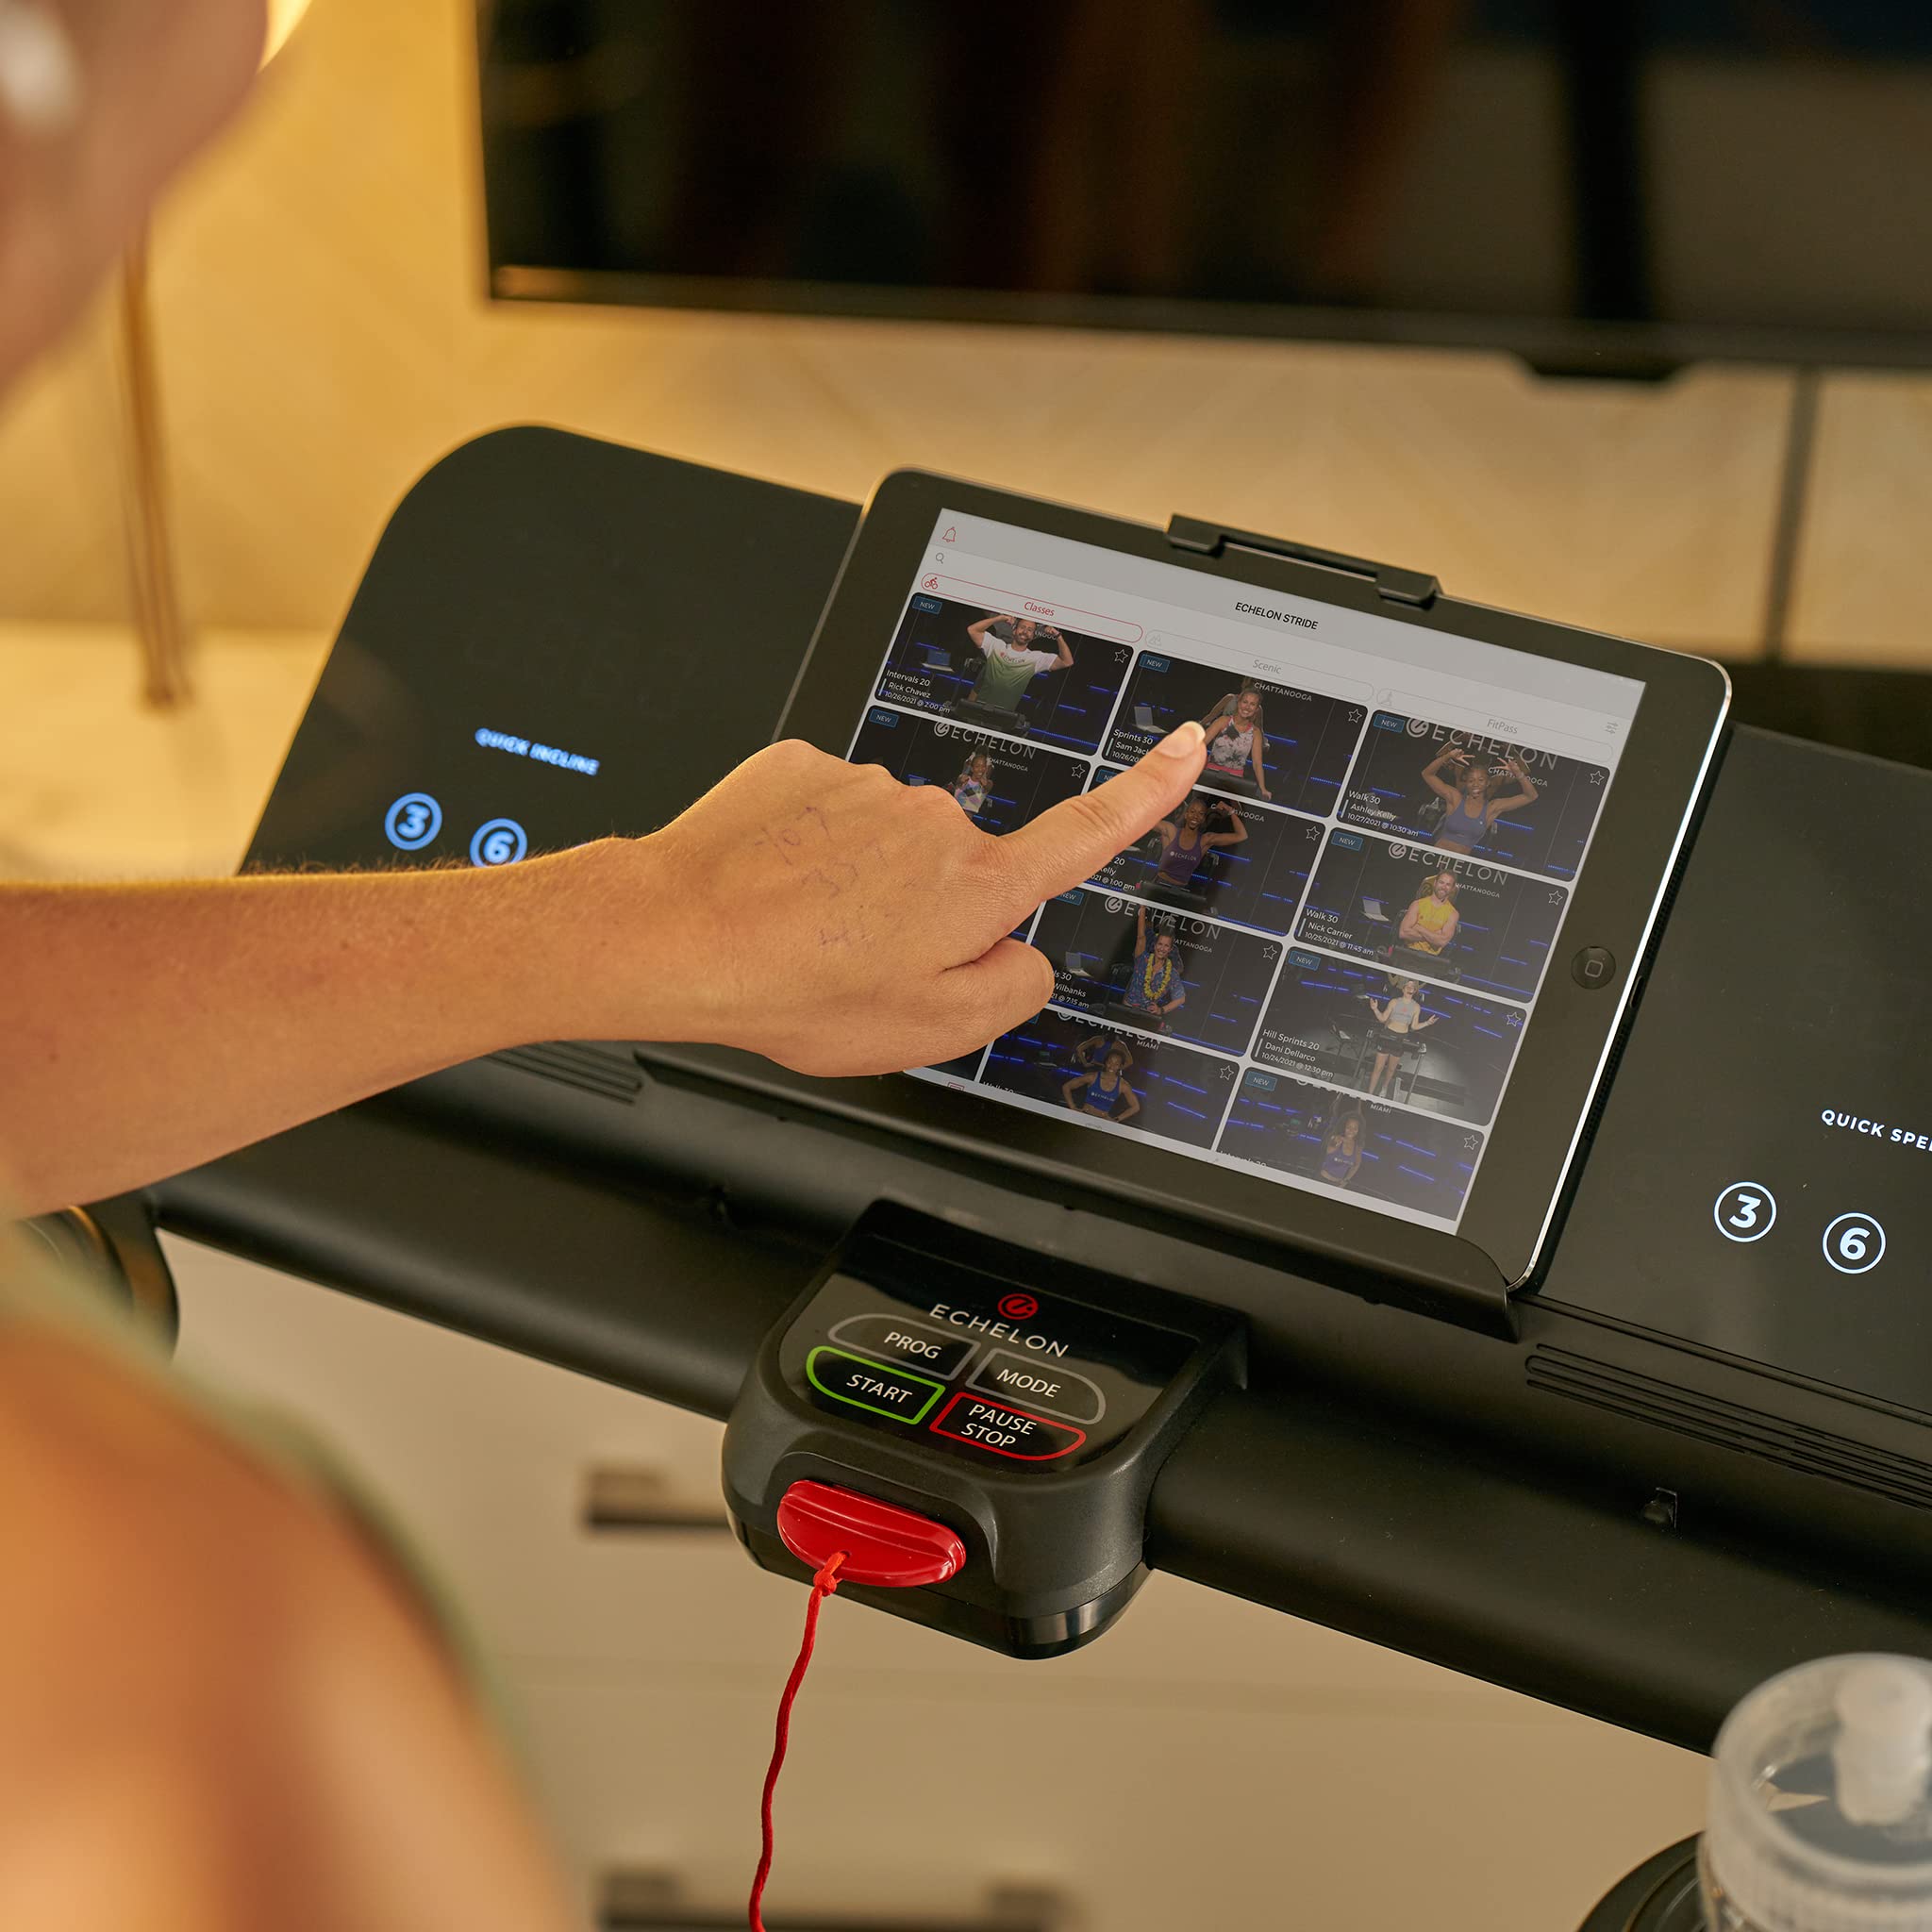 Echelon Stride Auto-Fold Smart Treadmill + Membership